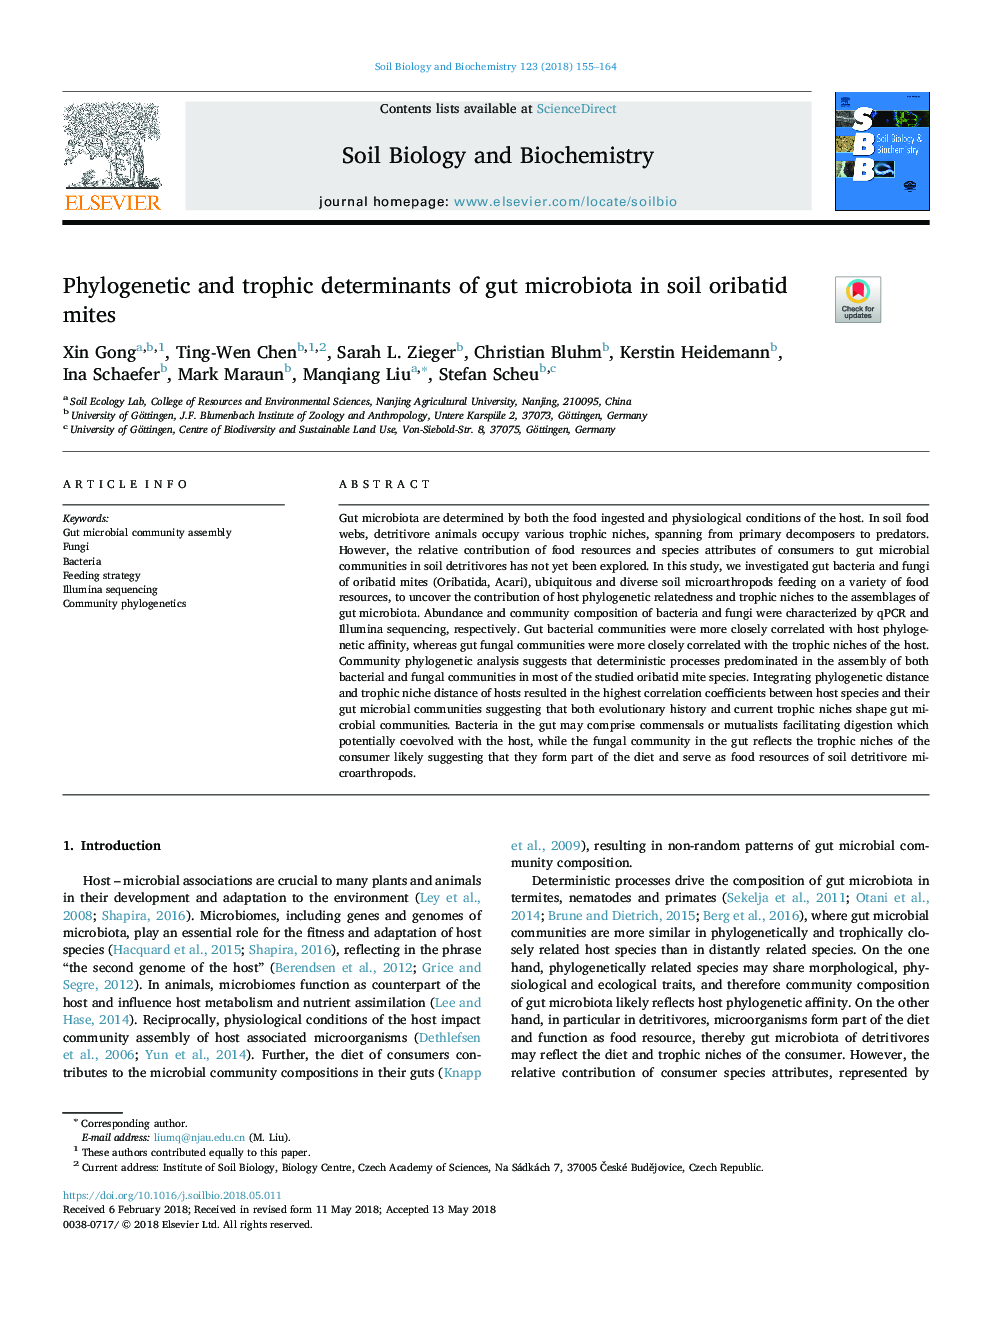 Phylogenetic and trophic determinants of gut microbiota in soil oribatid mites